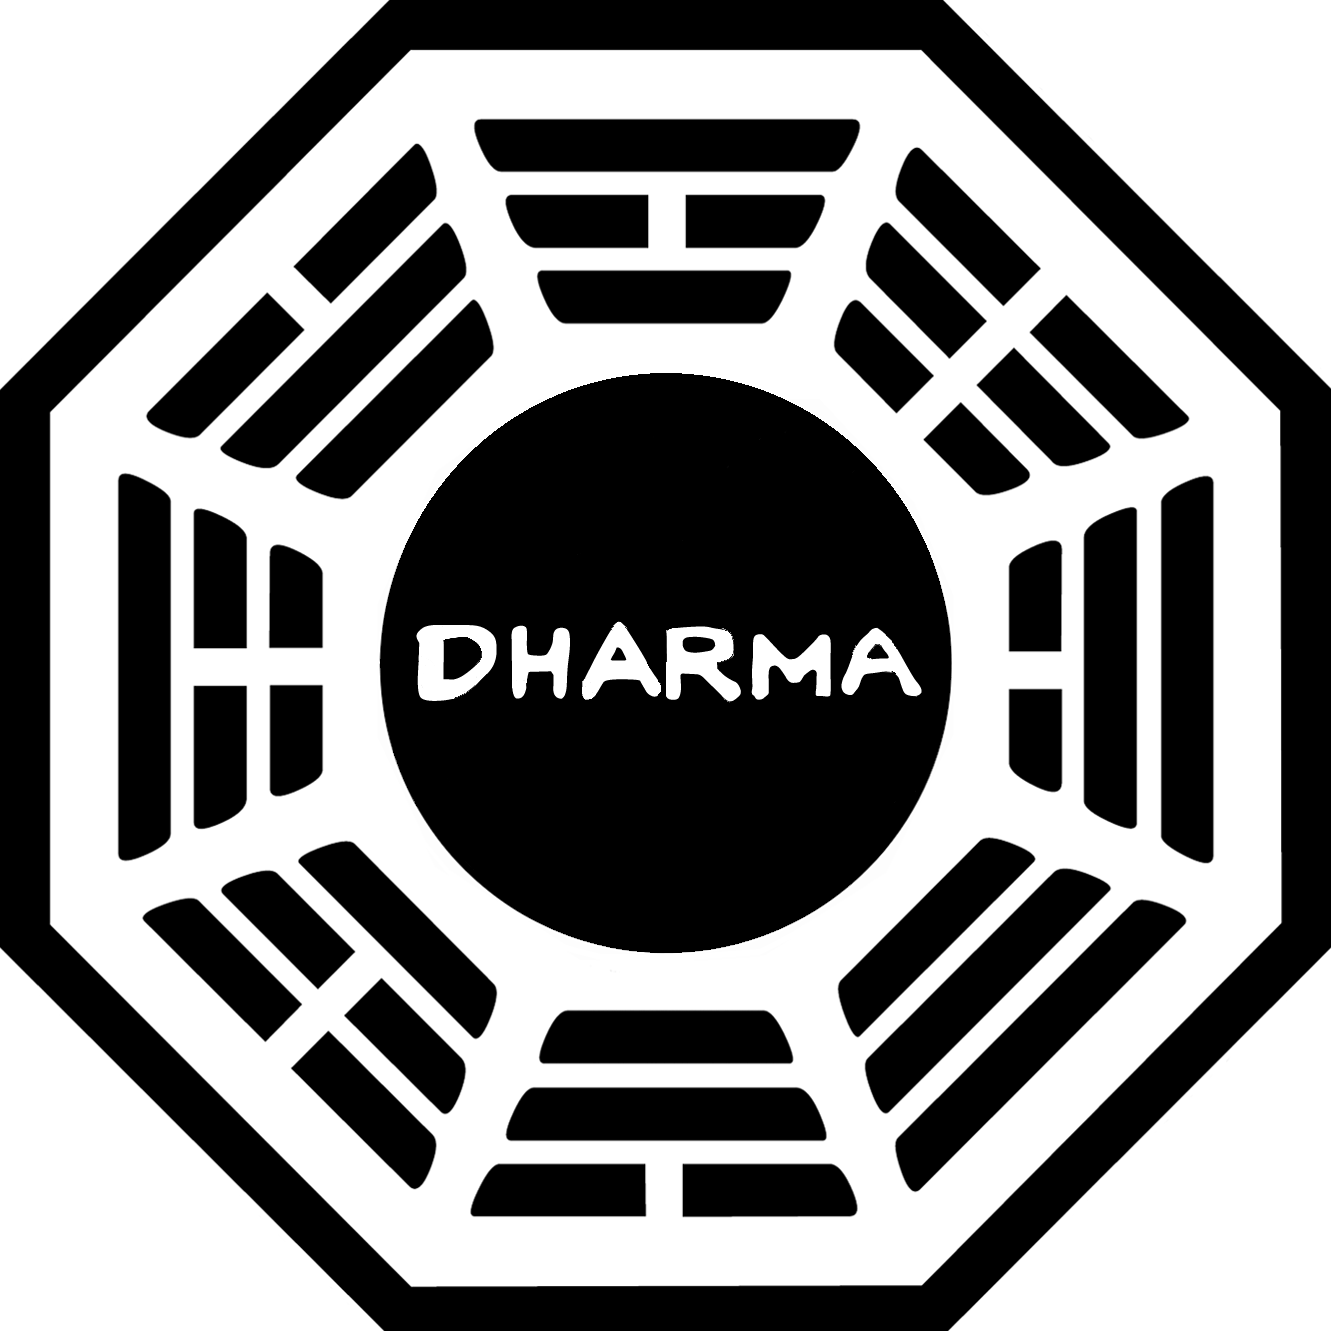 Dharma Logo - File:Dharma Initiative logo.png - Wikimedia Commons